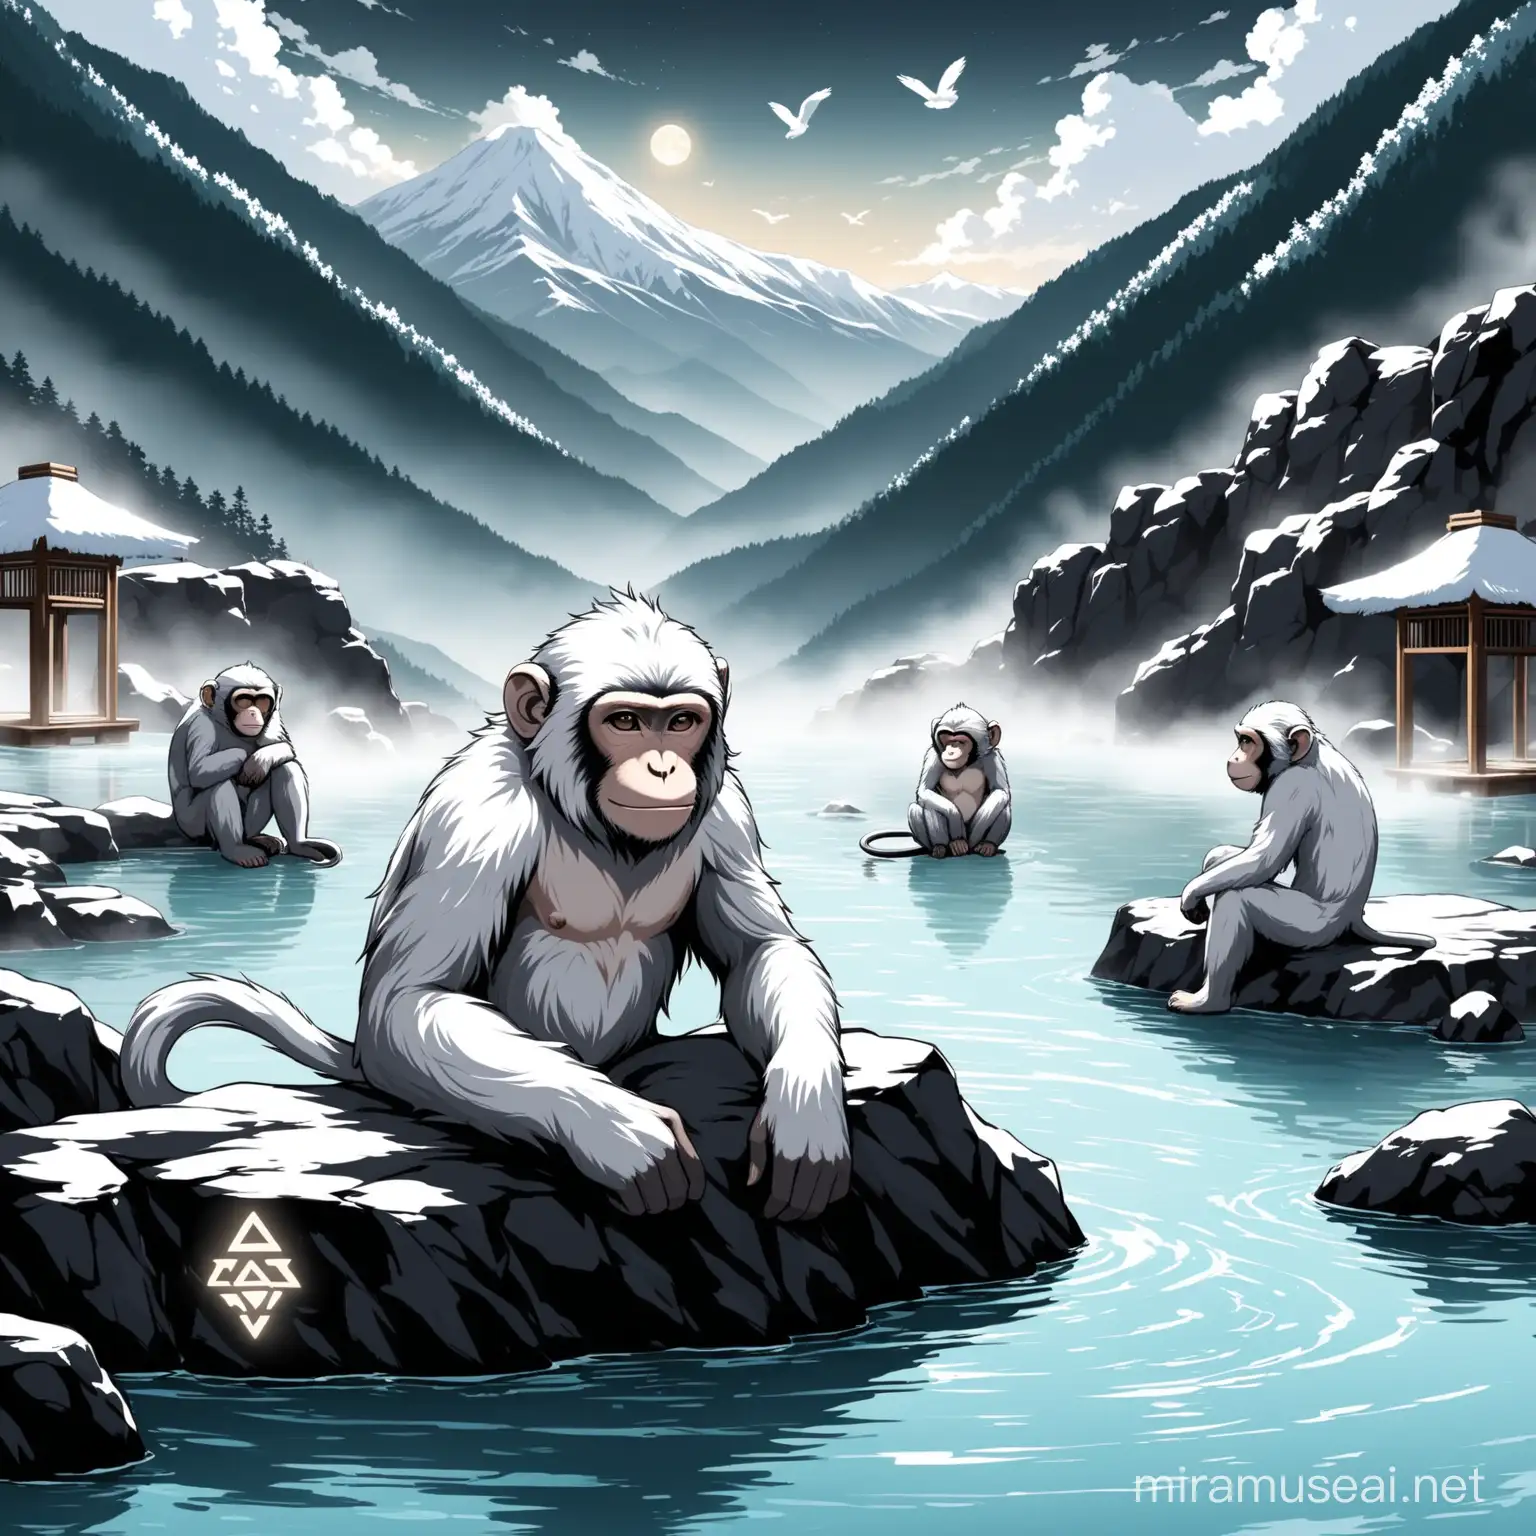 monkey in hot springs (group)
appreance- noir/ white fur/ white monkey-runes/ relaxing/
background-mountain/noir/rockysteam